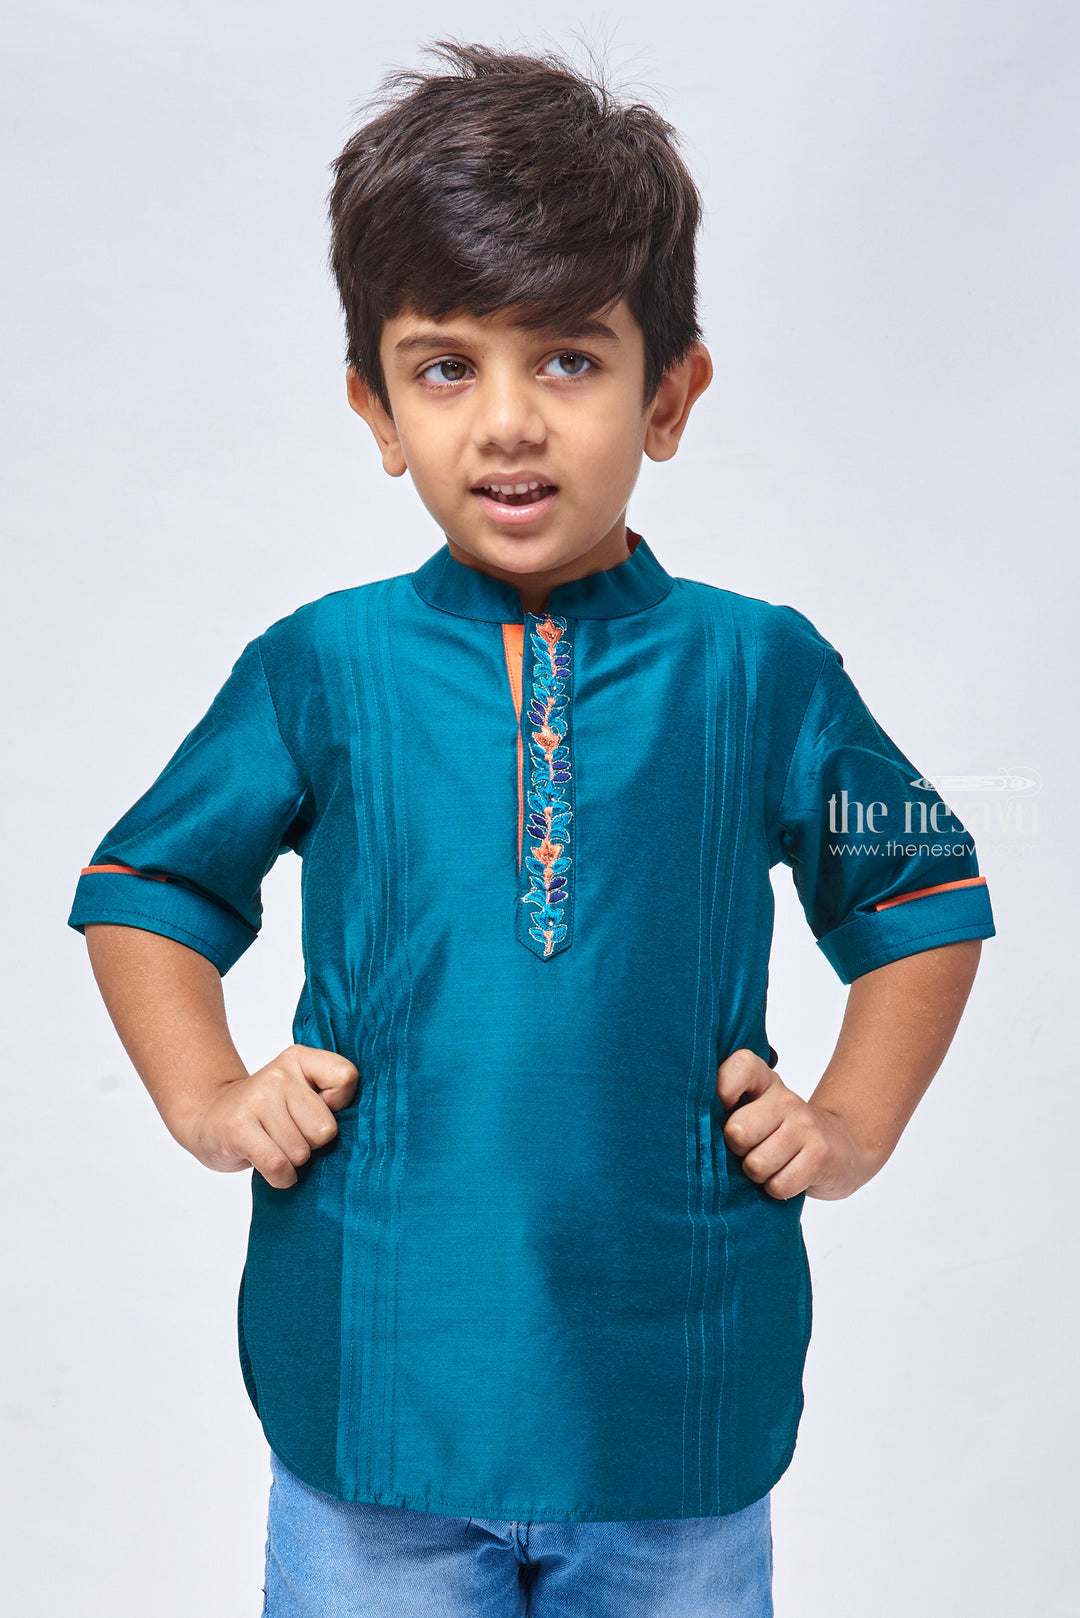 The Nesavu Boys Kurtha Shirt Matching Father Son Shirts - Blue Skies Ahead Cool Blue Boys Shirt with Floral Embroidery Nesavu Celebrate Style : Exclusive Birthday Kurta Shirts for Kids | The Nesavu